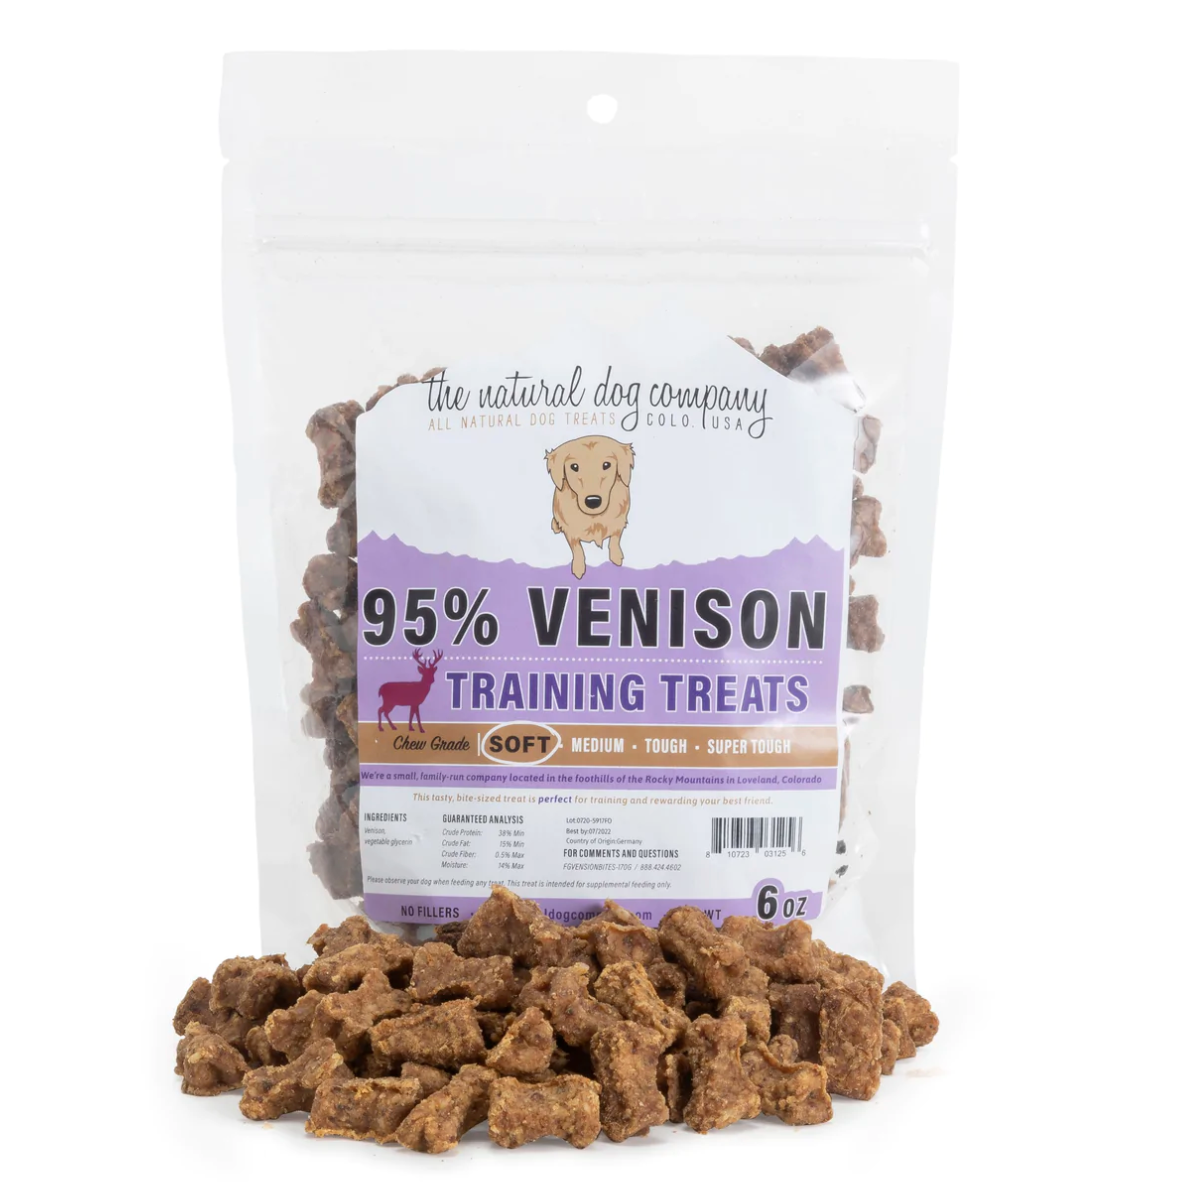 Tuesday's Natural Dog Company All Natural Venison Bites Training Treats